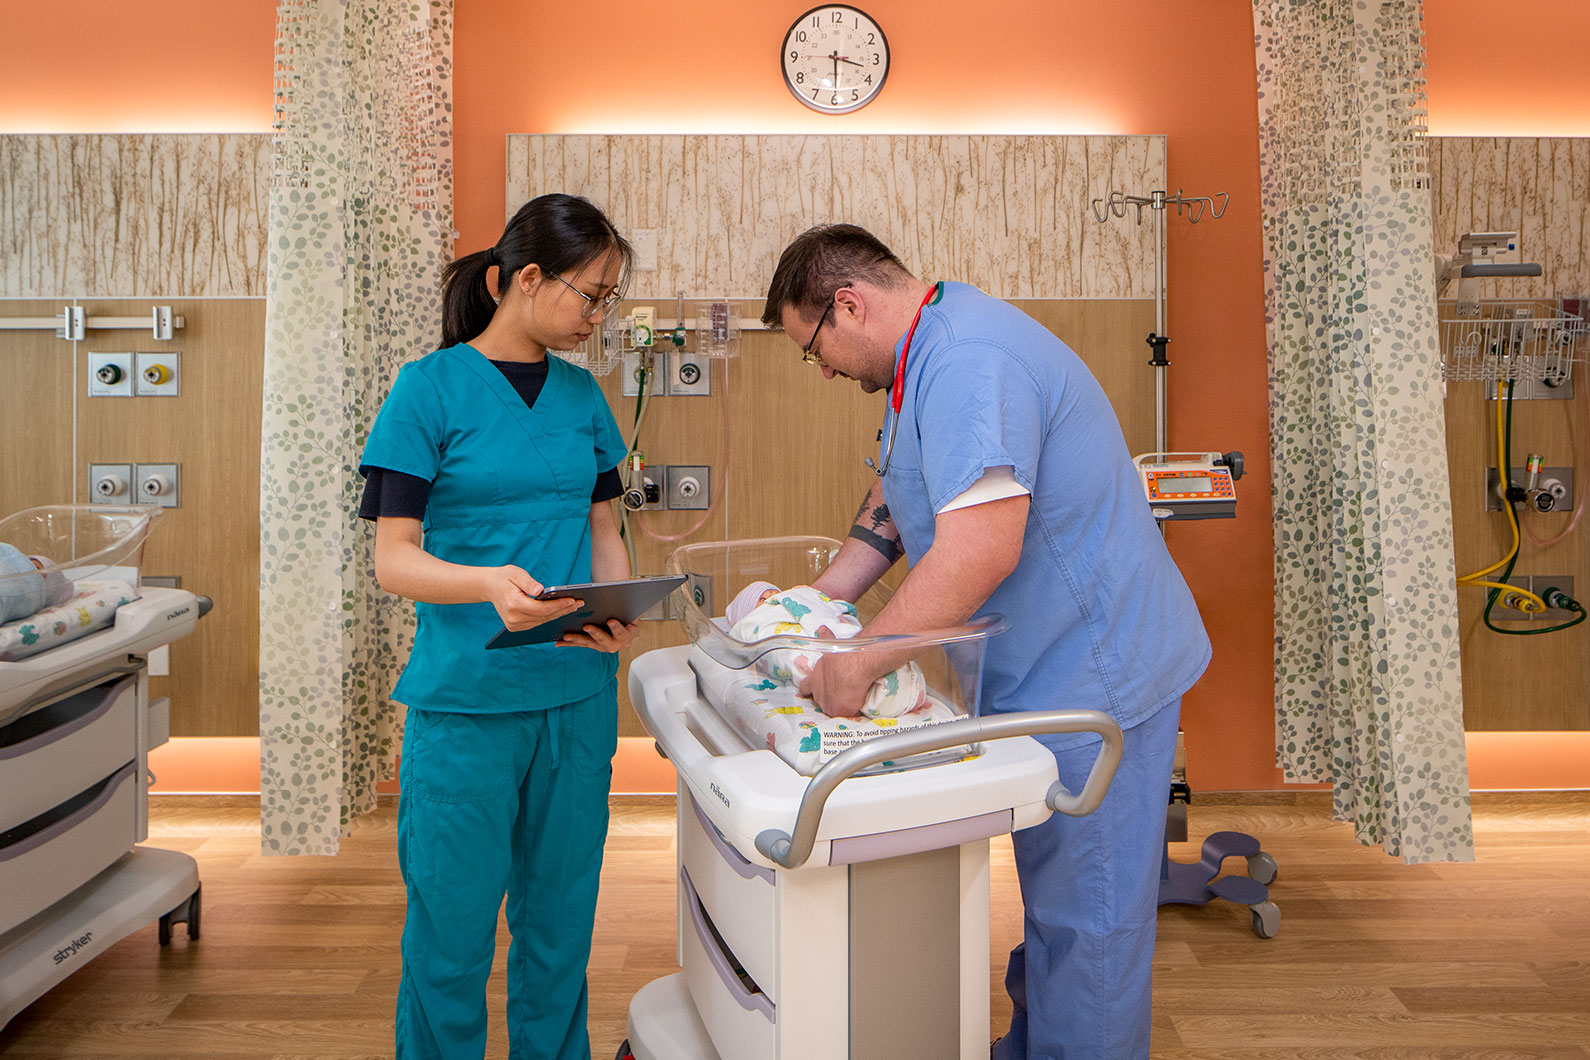 Nurse with chart observing second nurse handling infant